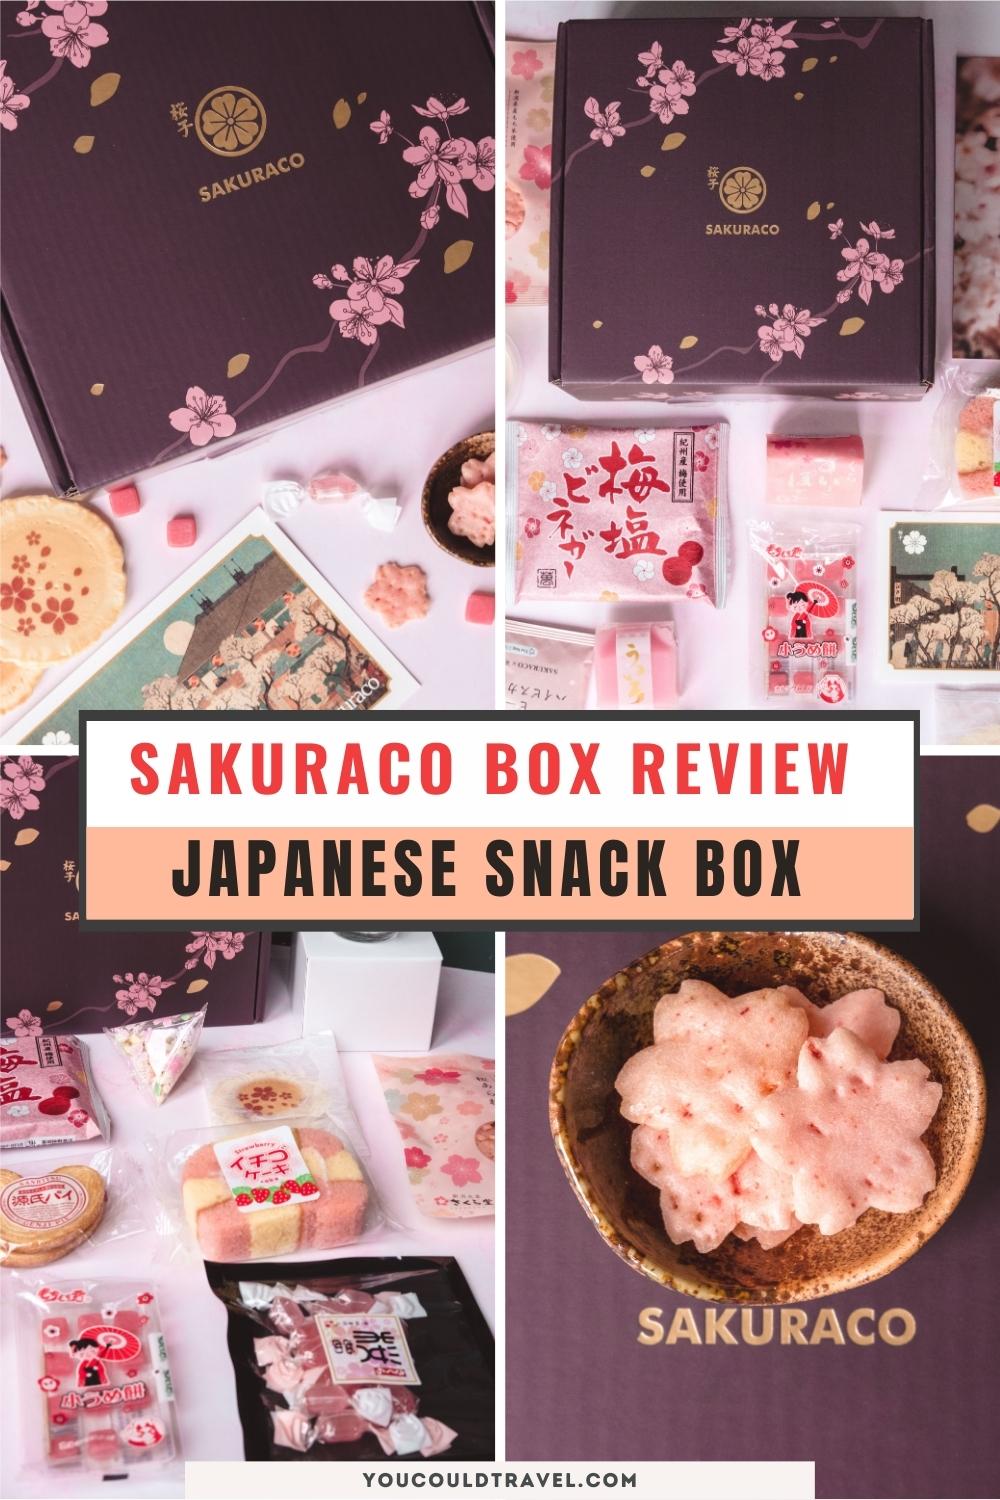 Is Sakuraco box worth it?